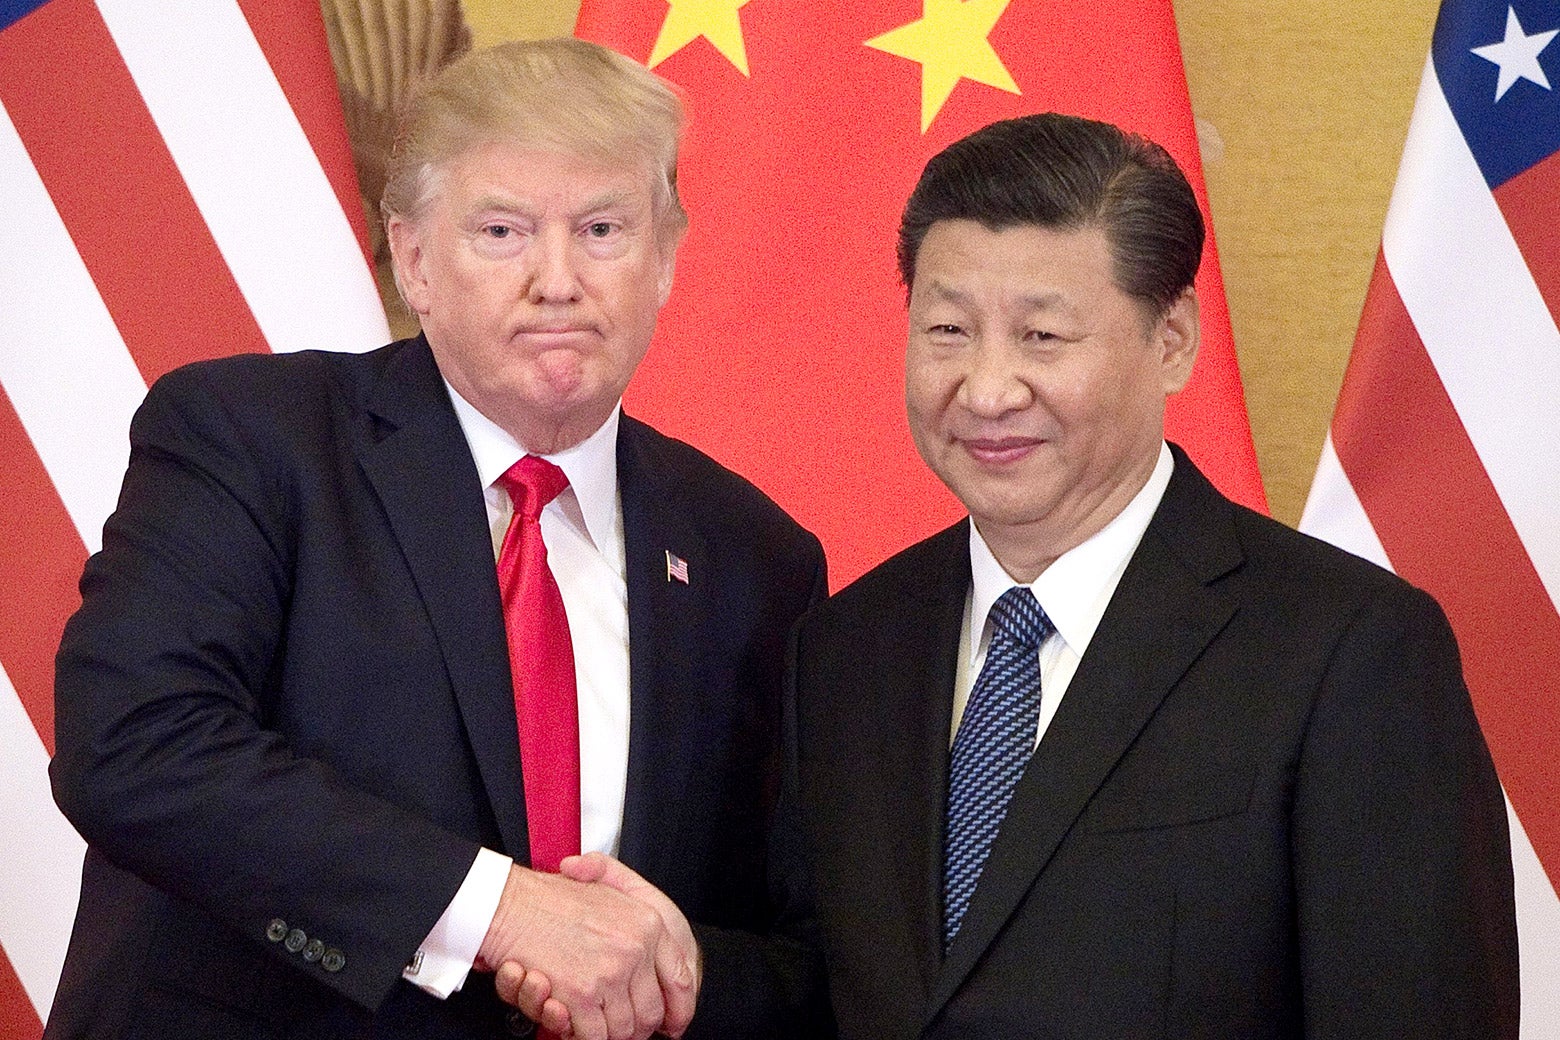 Donald Trump and Xi Jinping, standing, shake hands.